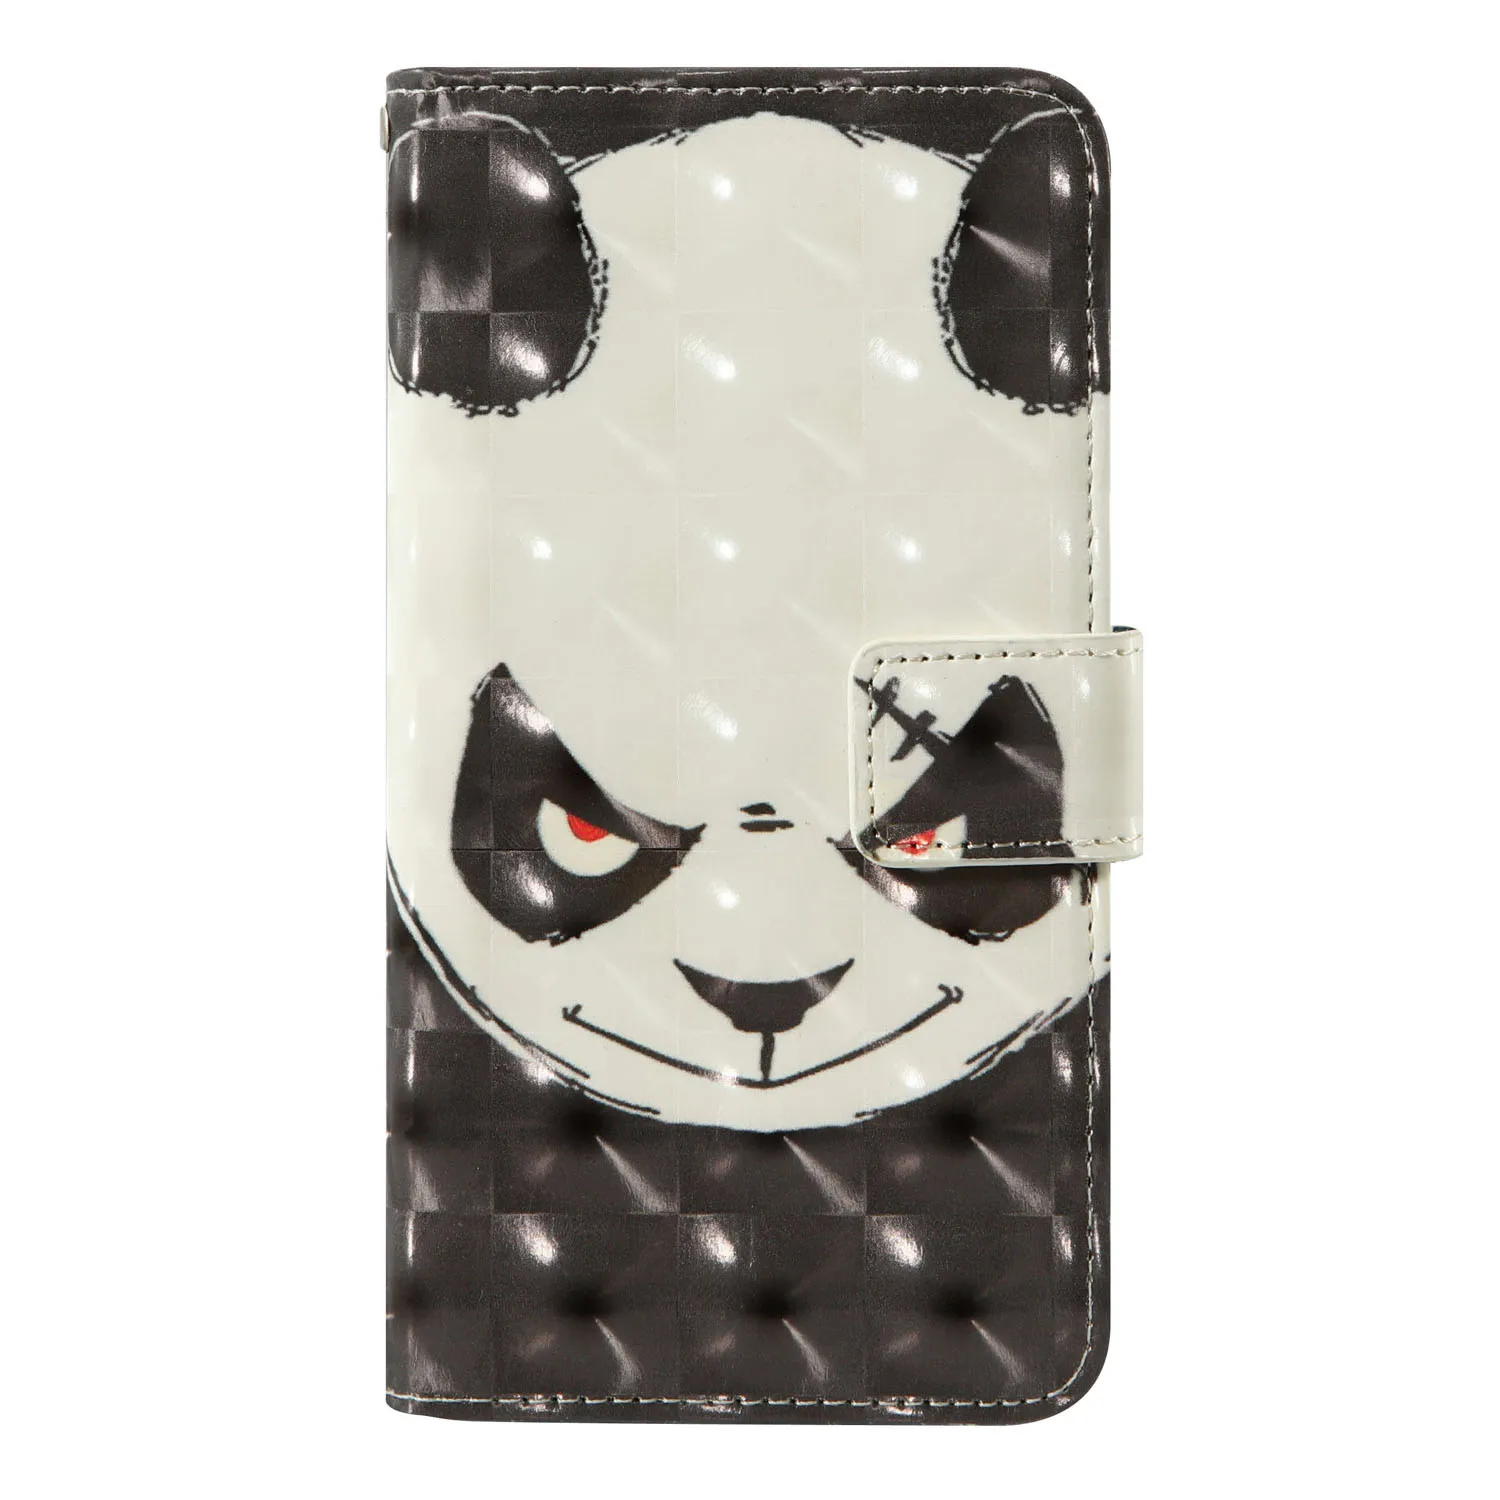 Кожаный чехол-бумажник с откидной крышкой 3D для sony Xperia XZs E5 X Compact Performance XA C5 Ultra XZ C4 E4g E4 M4 Aqua M5 Z3+ Z5 чехол для телефона s - Цвет: Fierce panda